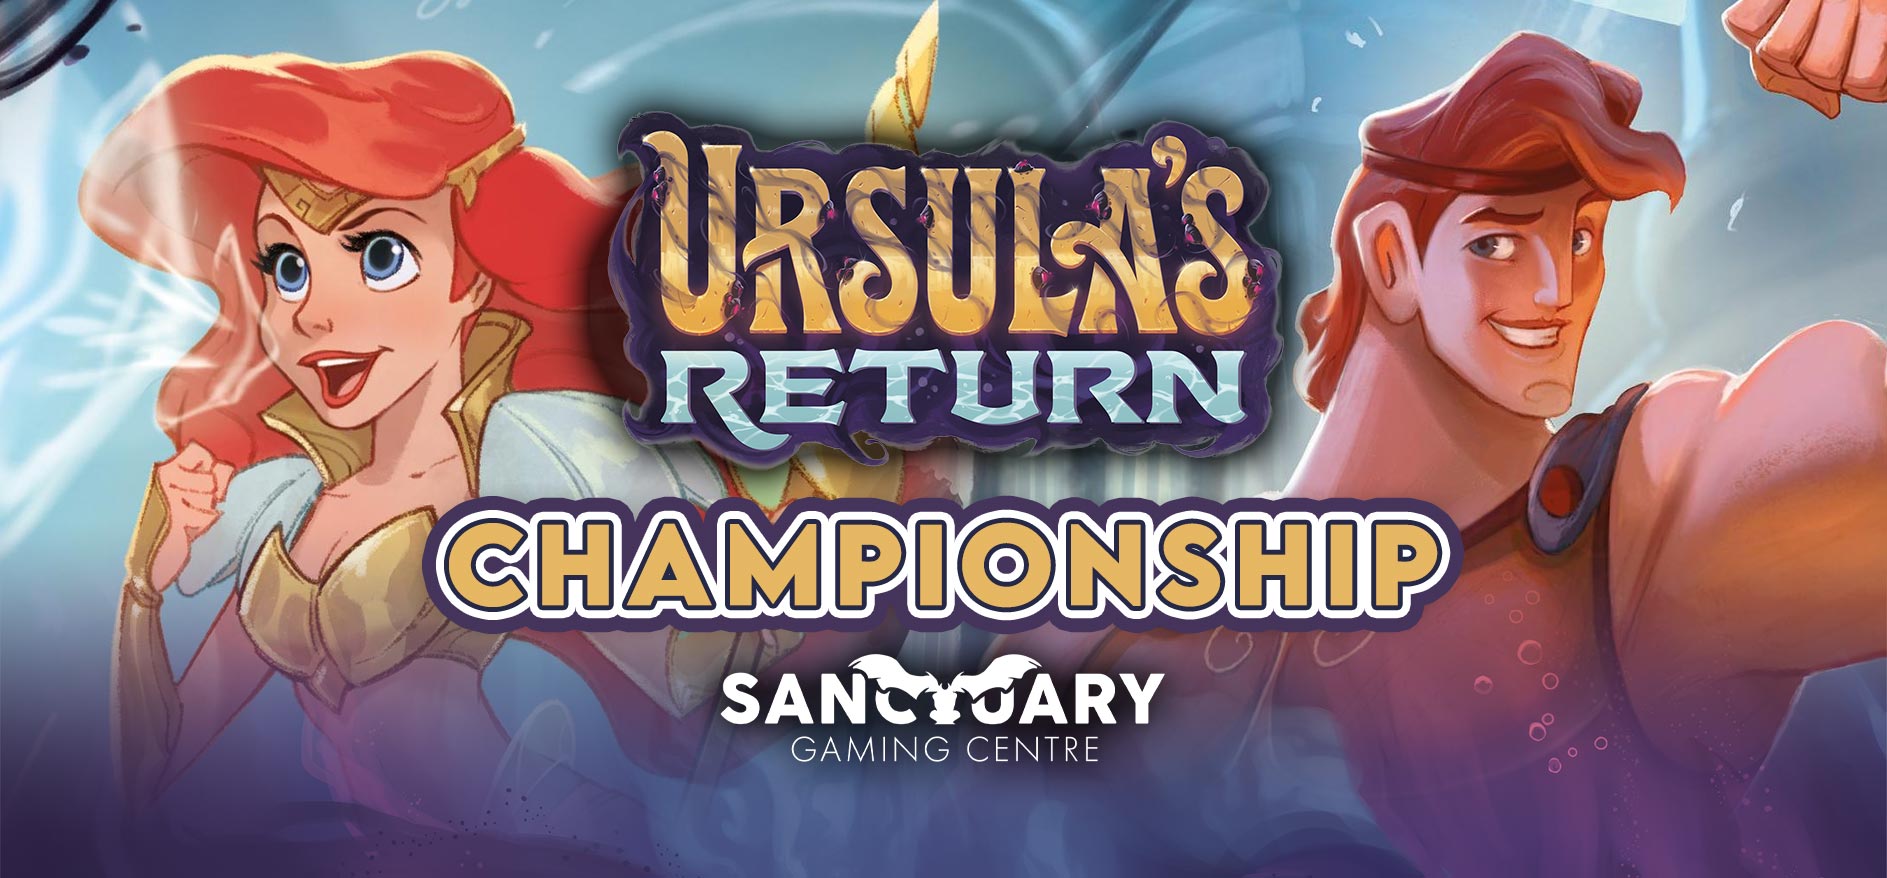 Ursula’s Return: Championship